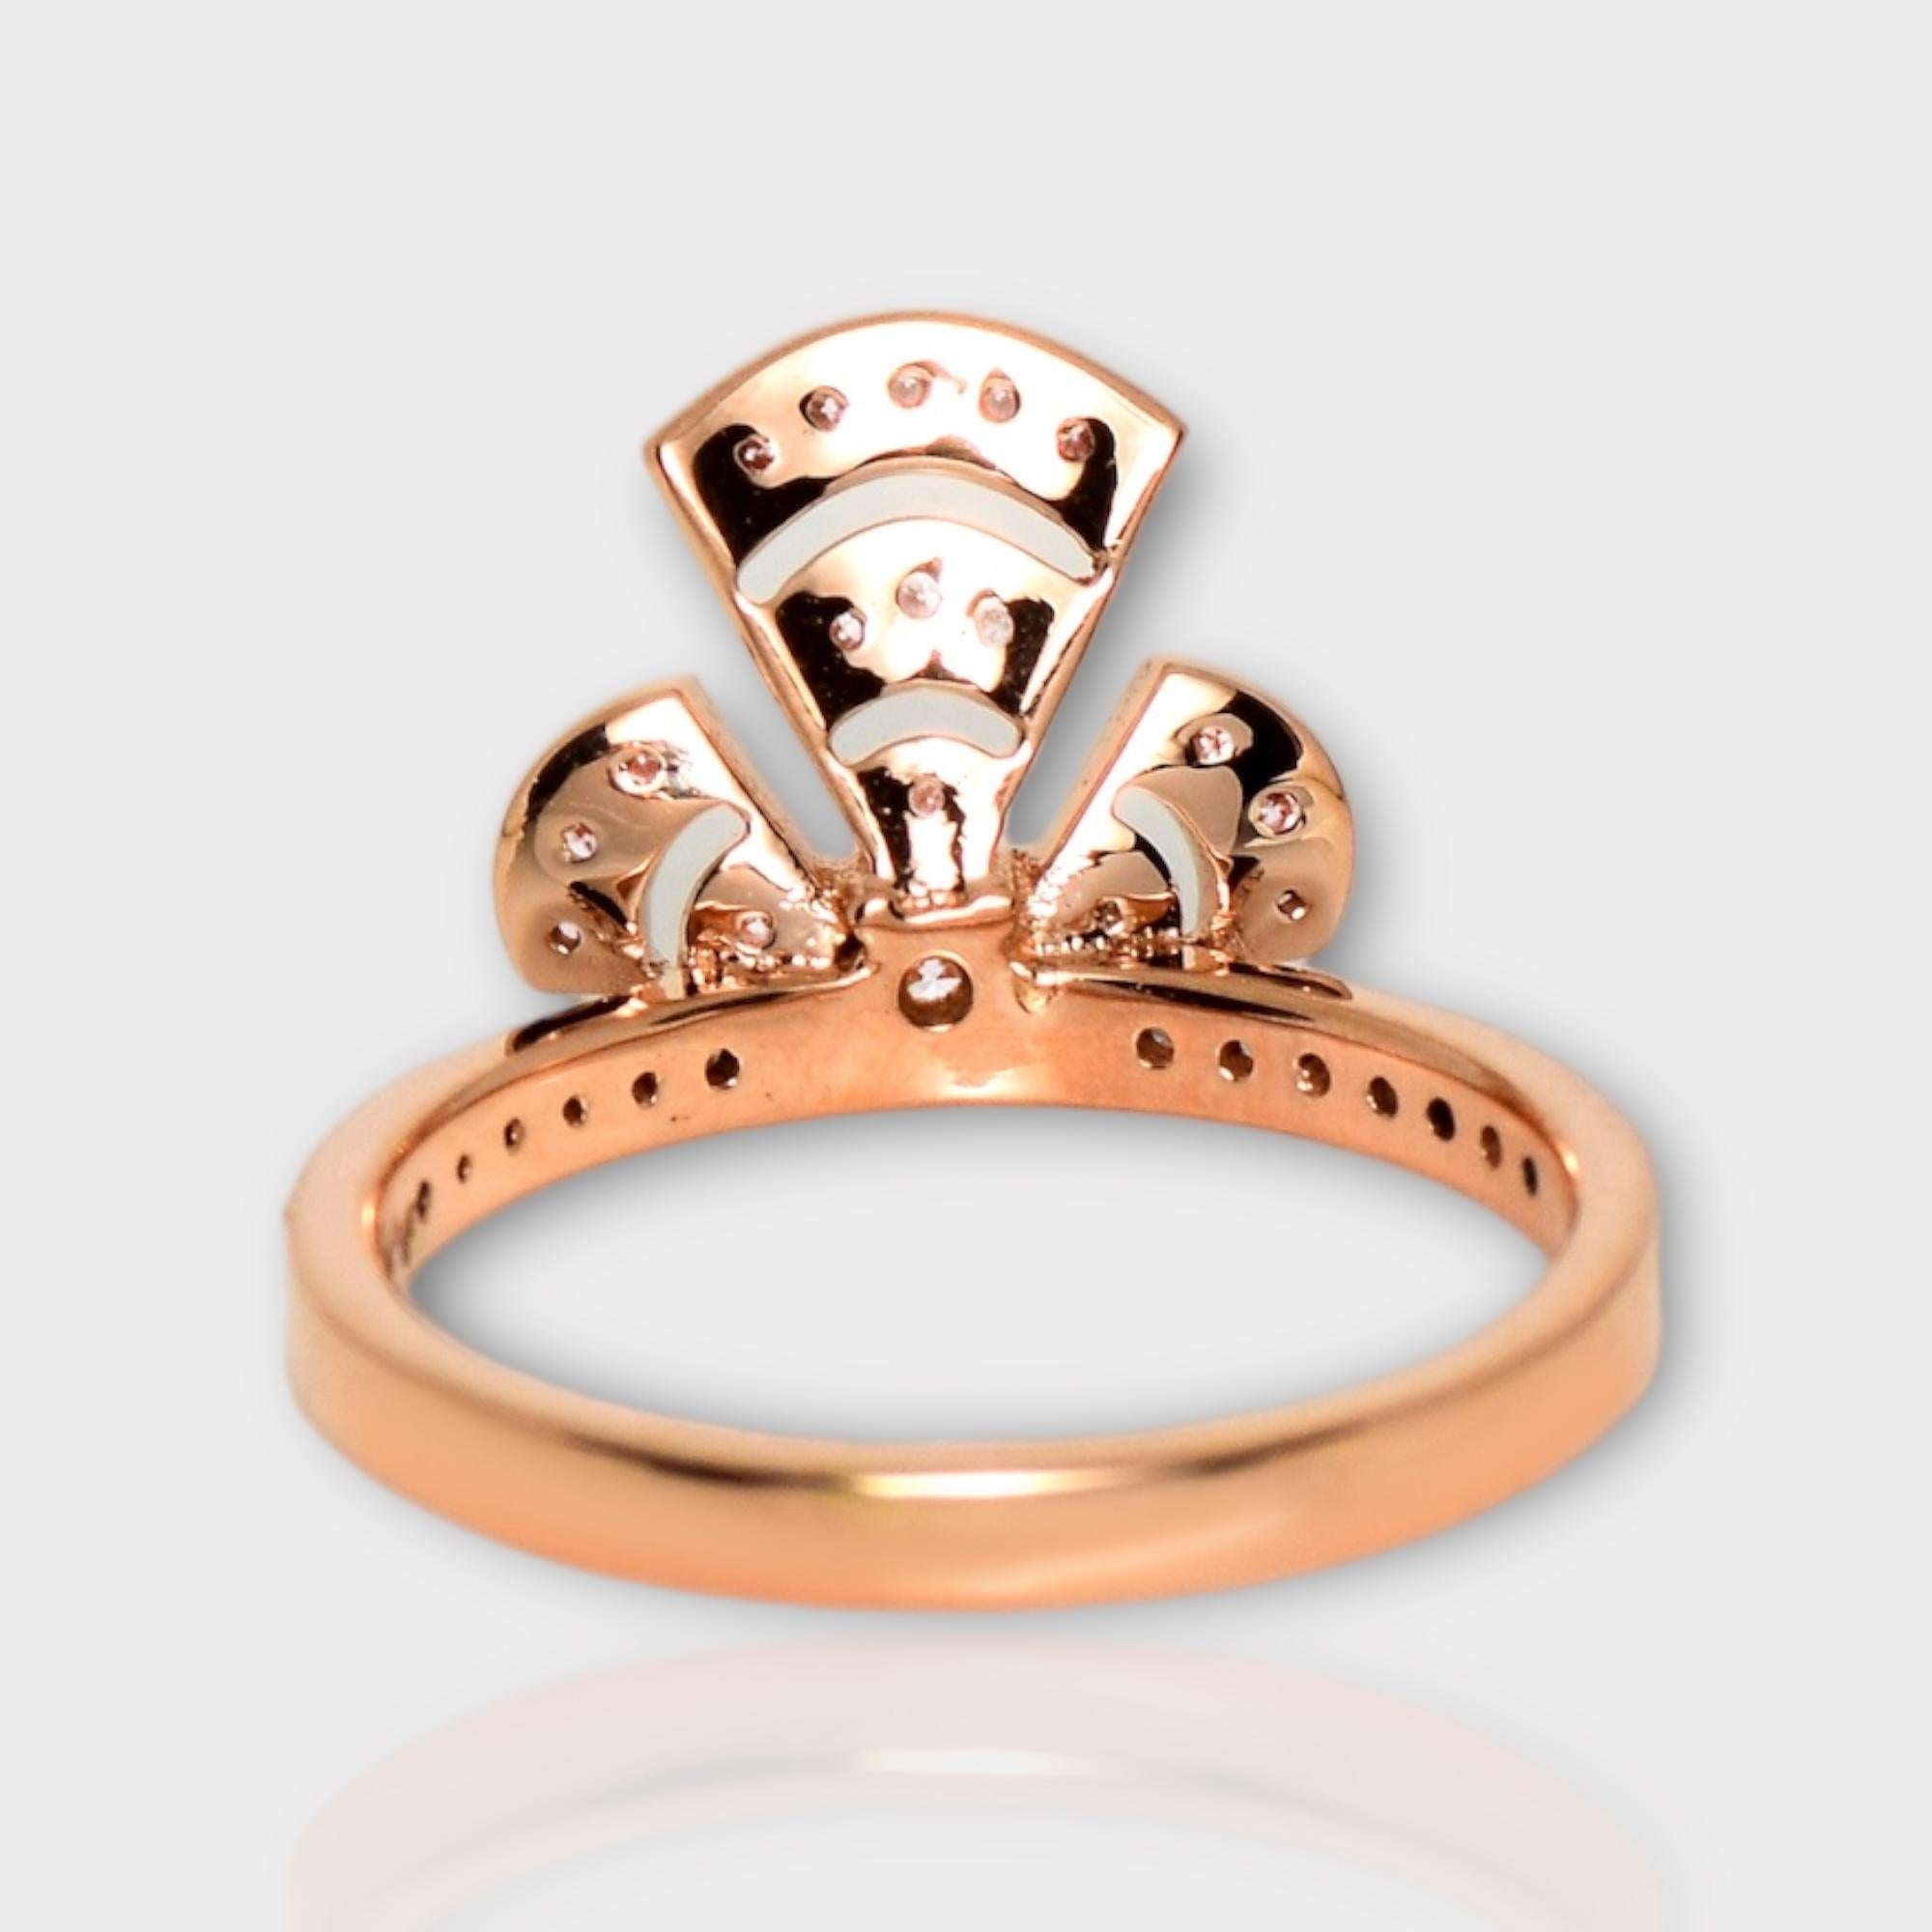 IGI 14K 0.30 ct Natural Pink Diamonds Art Deco Design Engagement Ring For Sale 1